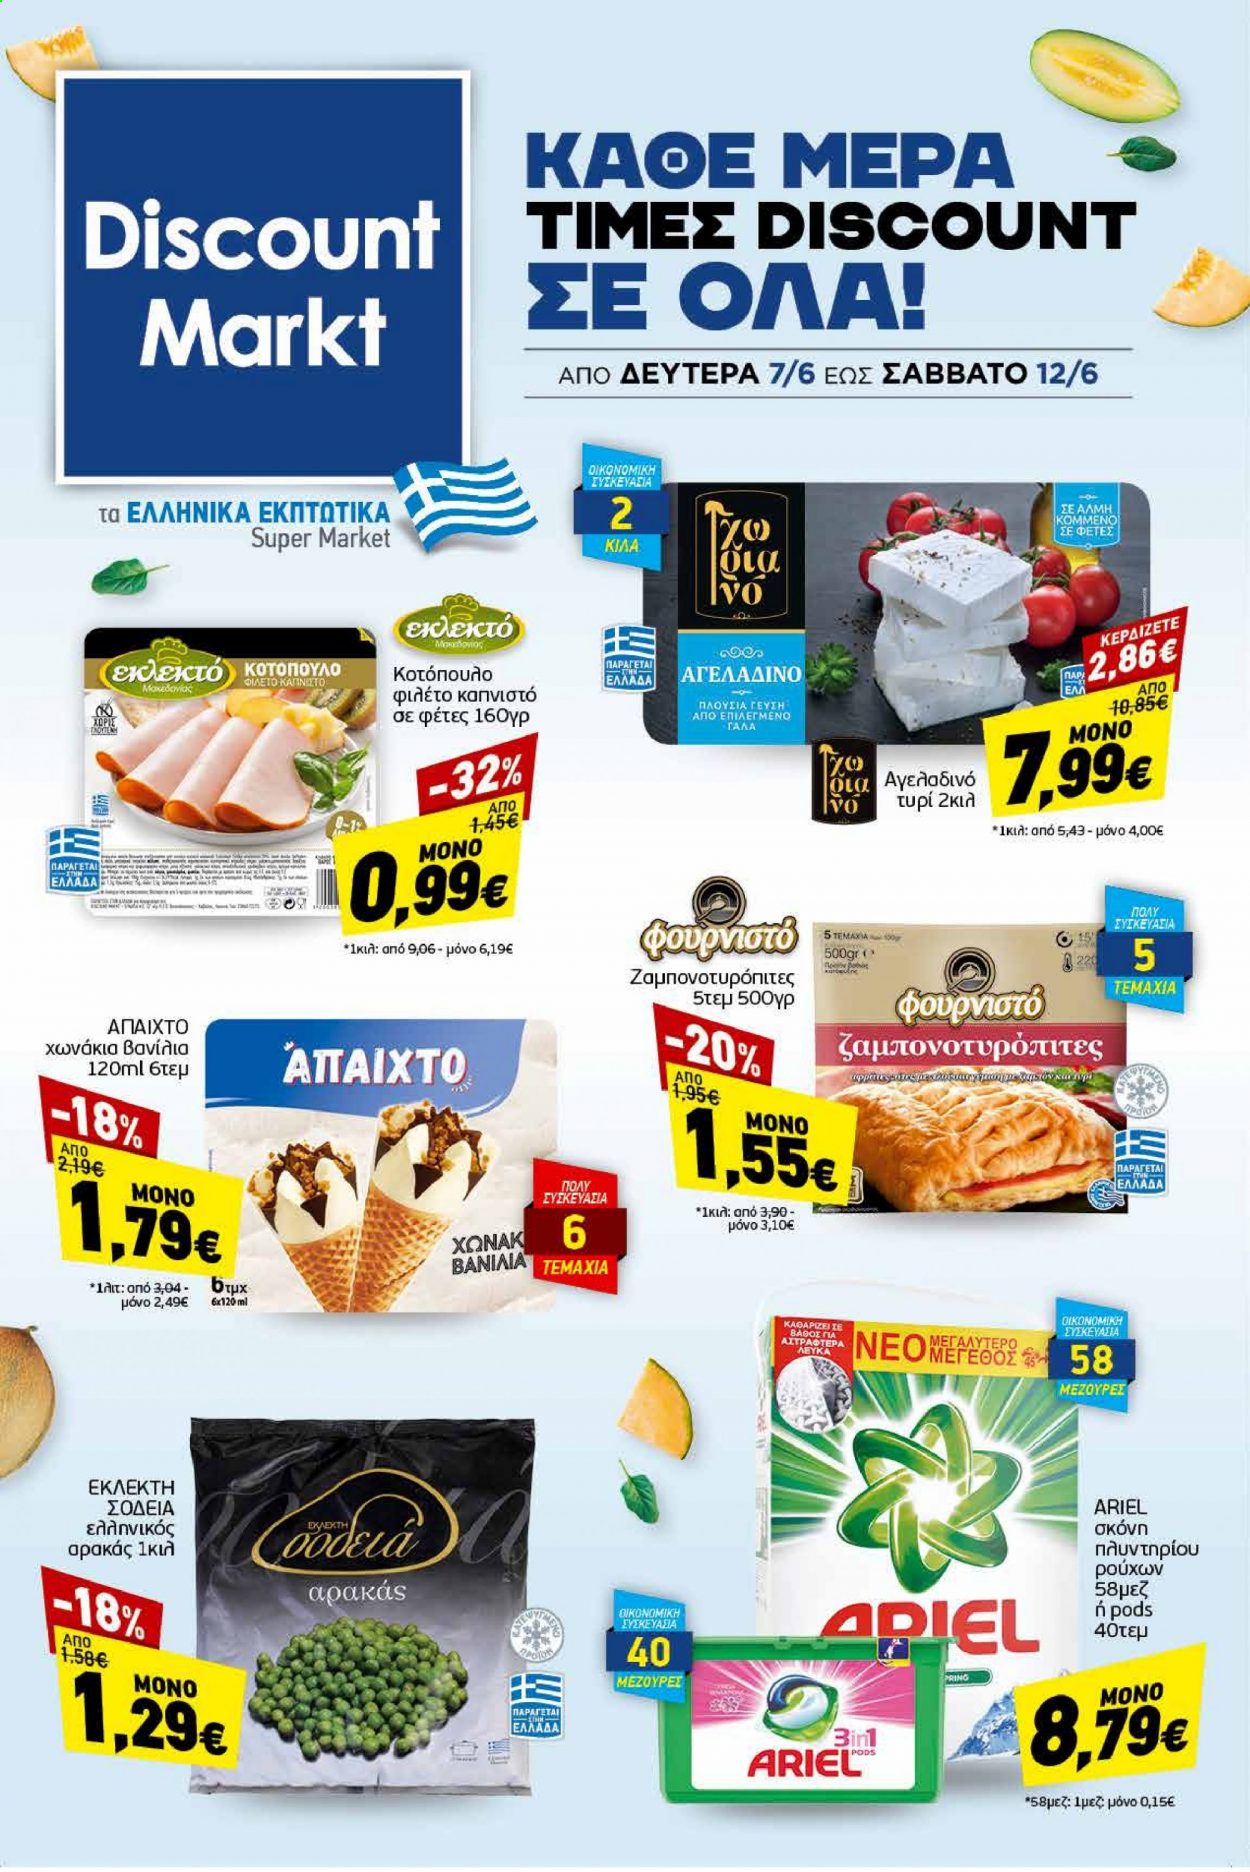 thumbnail - Φυλλάδια Discount Markt - 07.06.2021 - 12.06.2021 - Εκπτωτικά προϊόντα - αρακάς, κοτόπουλο, Ariel. Σελίδα 1.